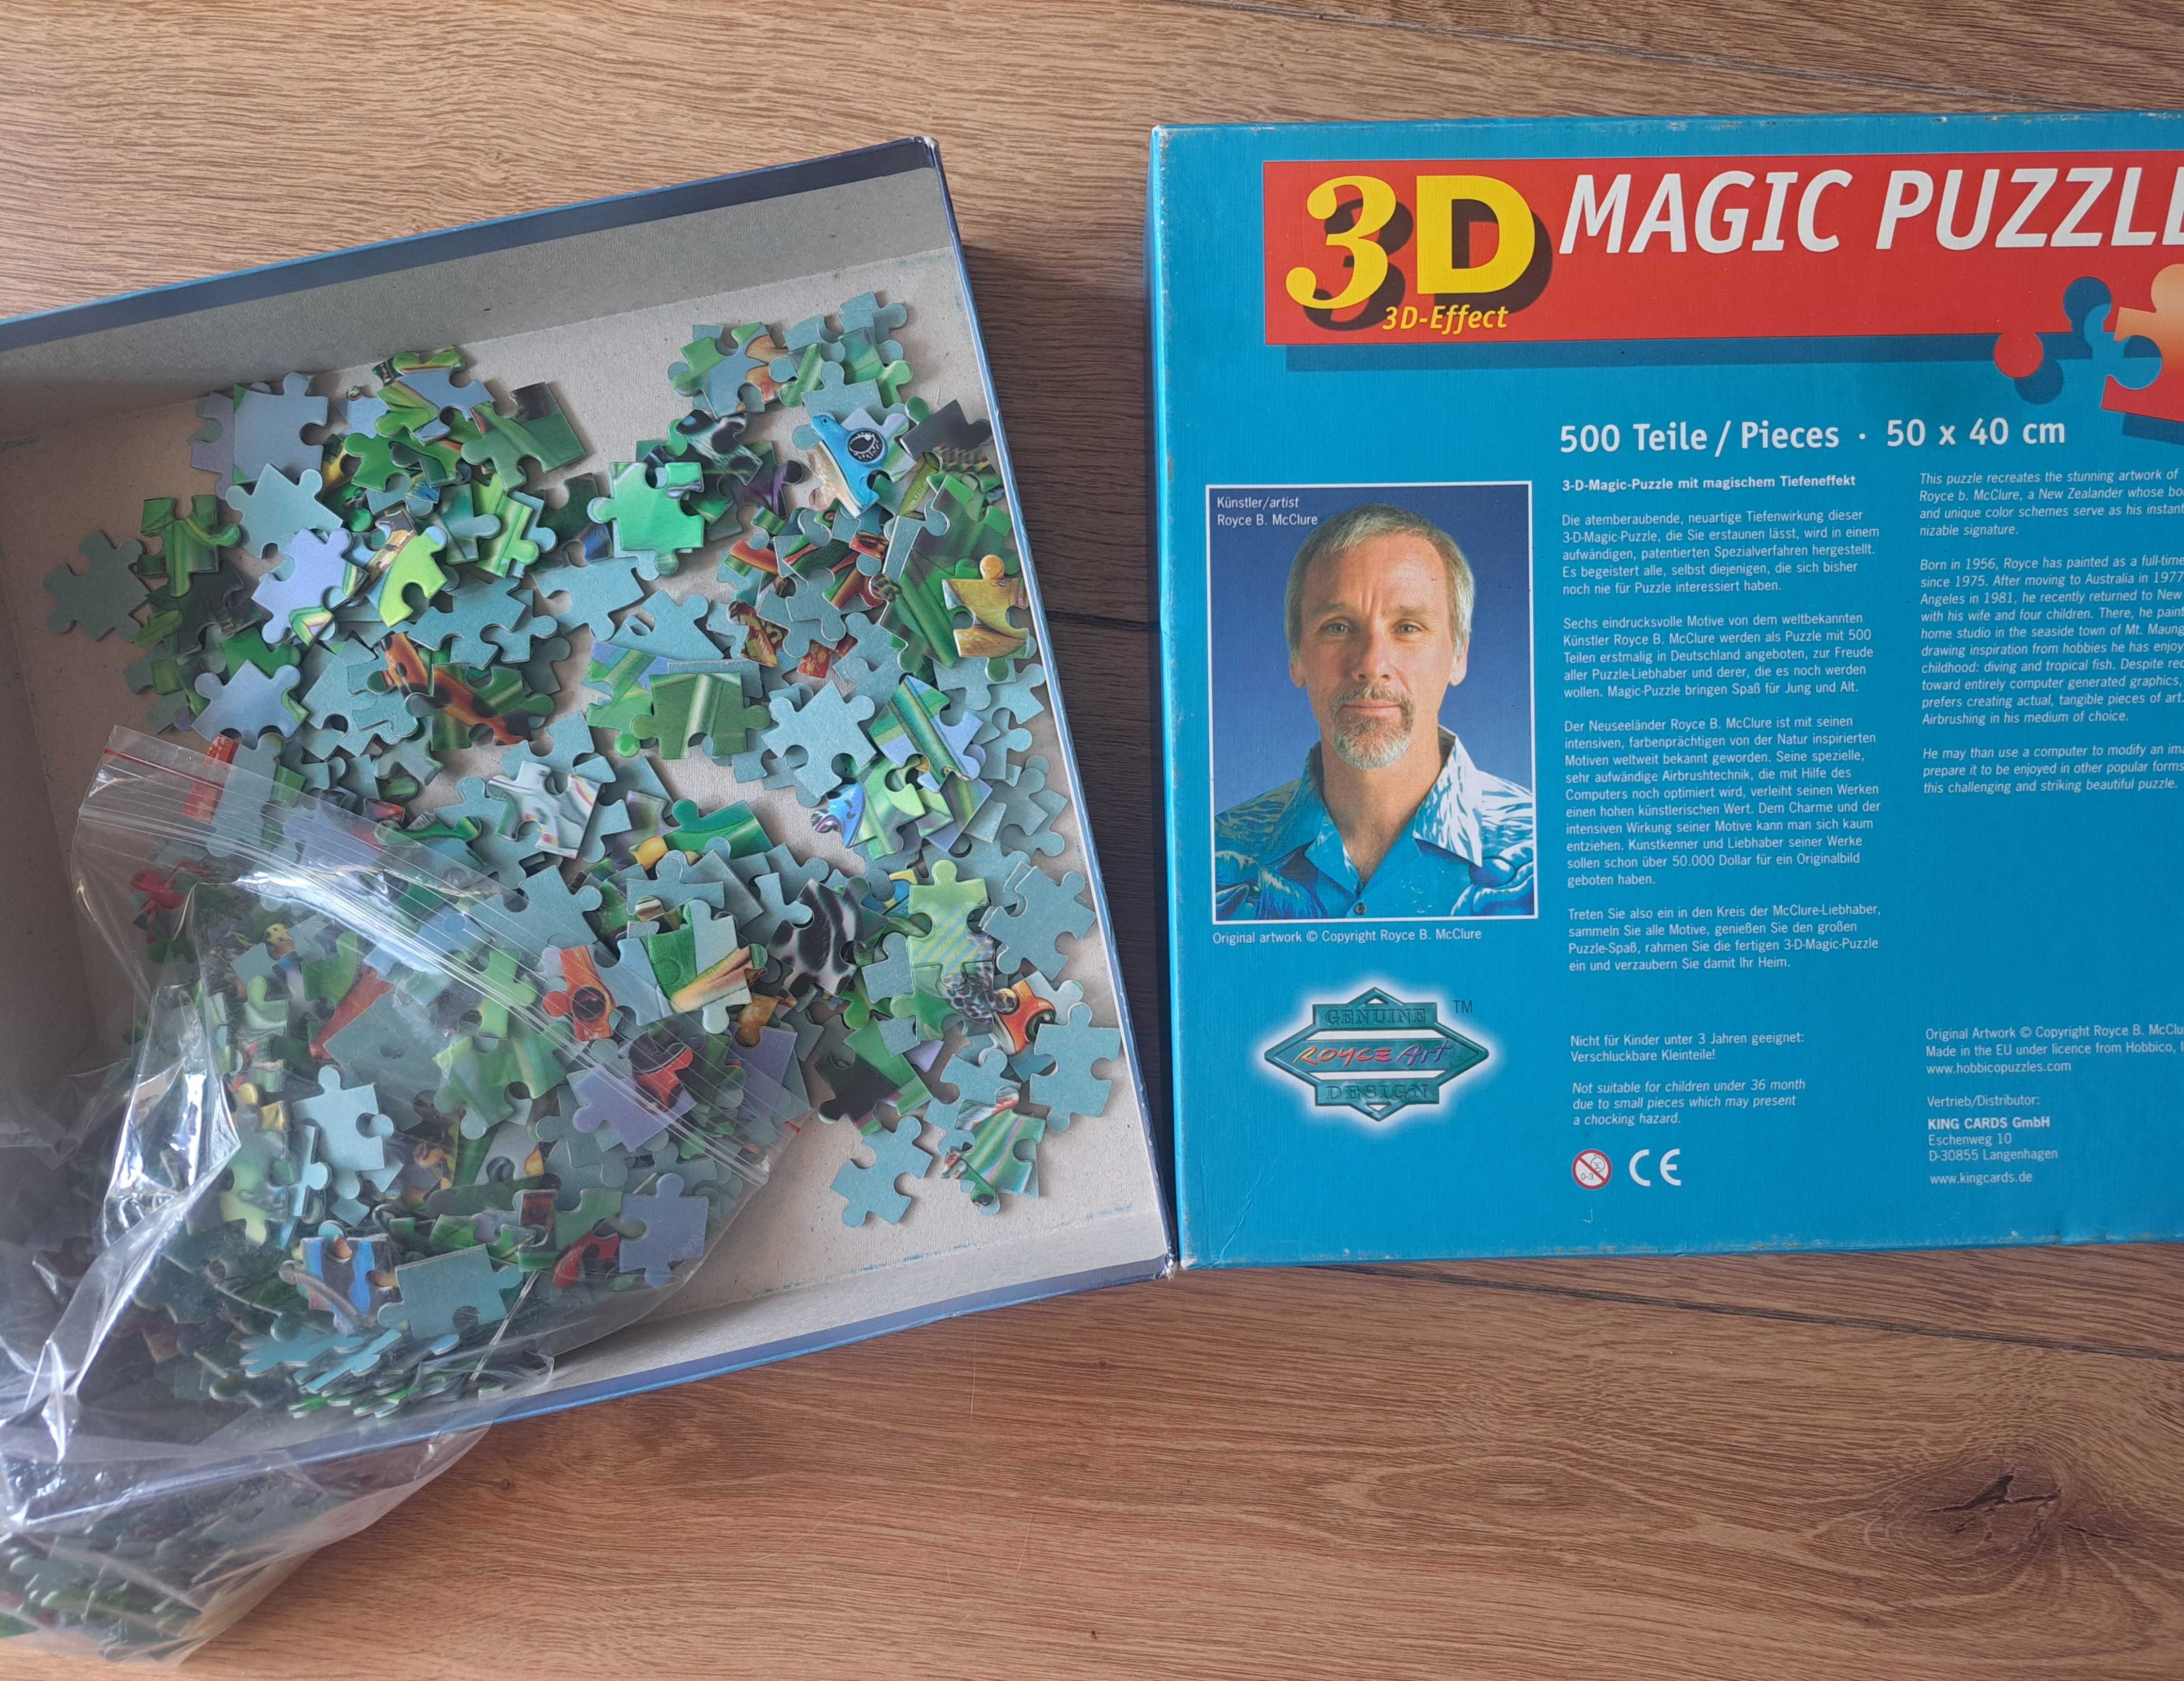 3D Magic Puzzle hologram